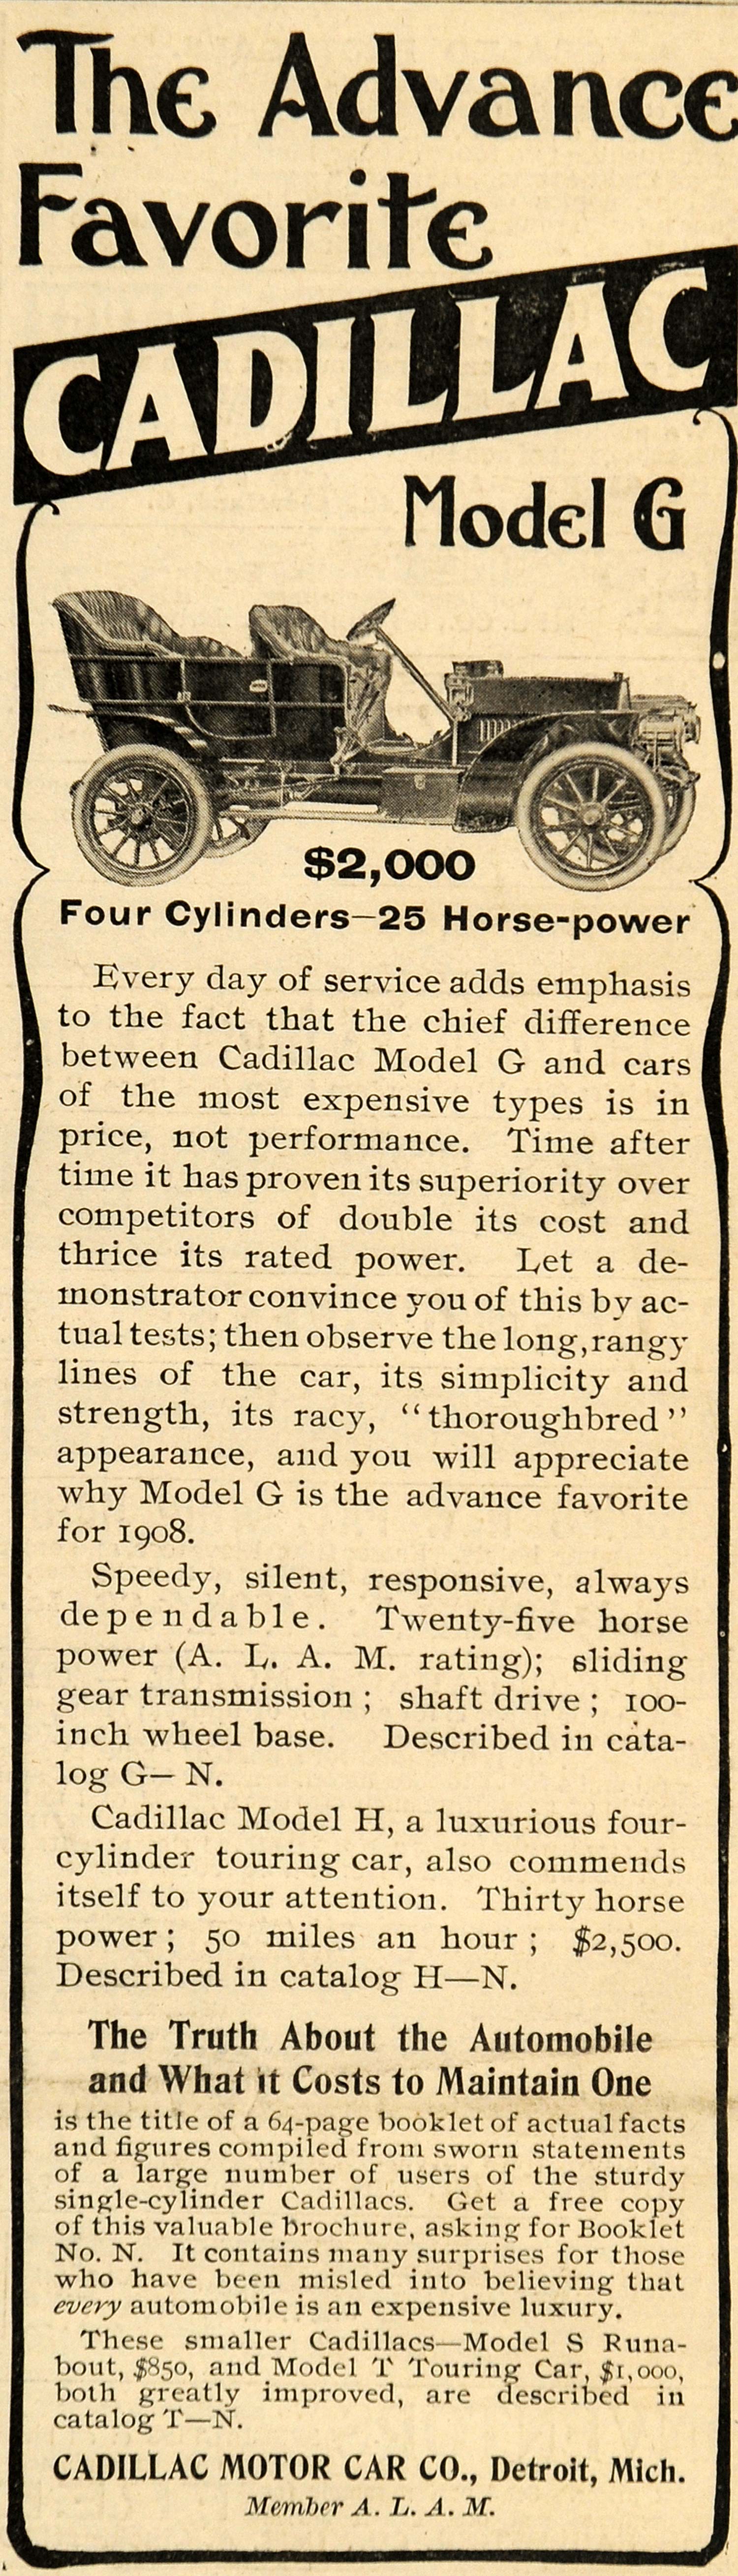 1907 Ad Cadillac Motor Car Co. Model G Automobile - ORIGINAL ADVERTISING SCA2